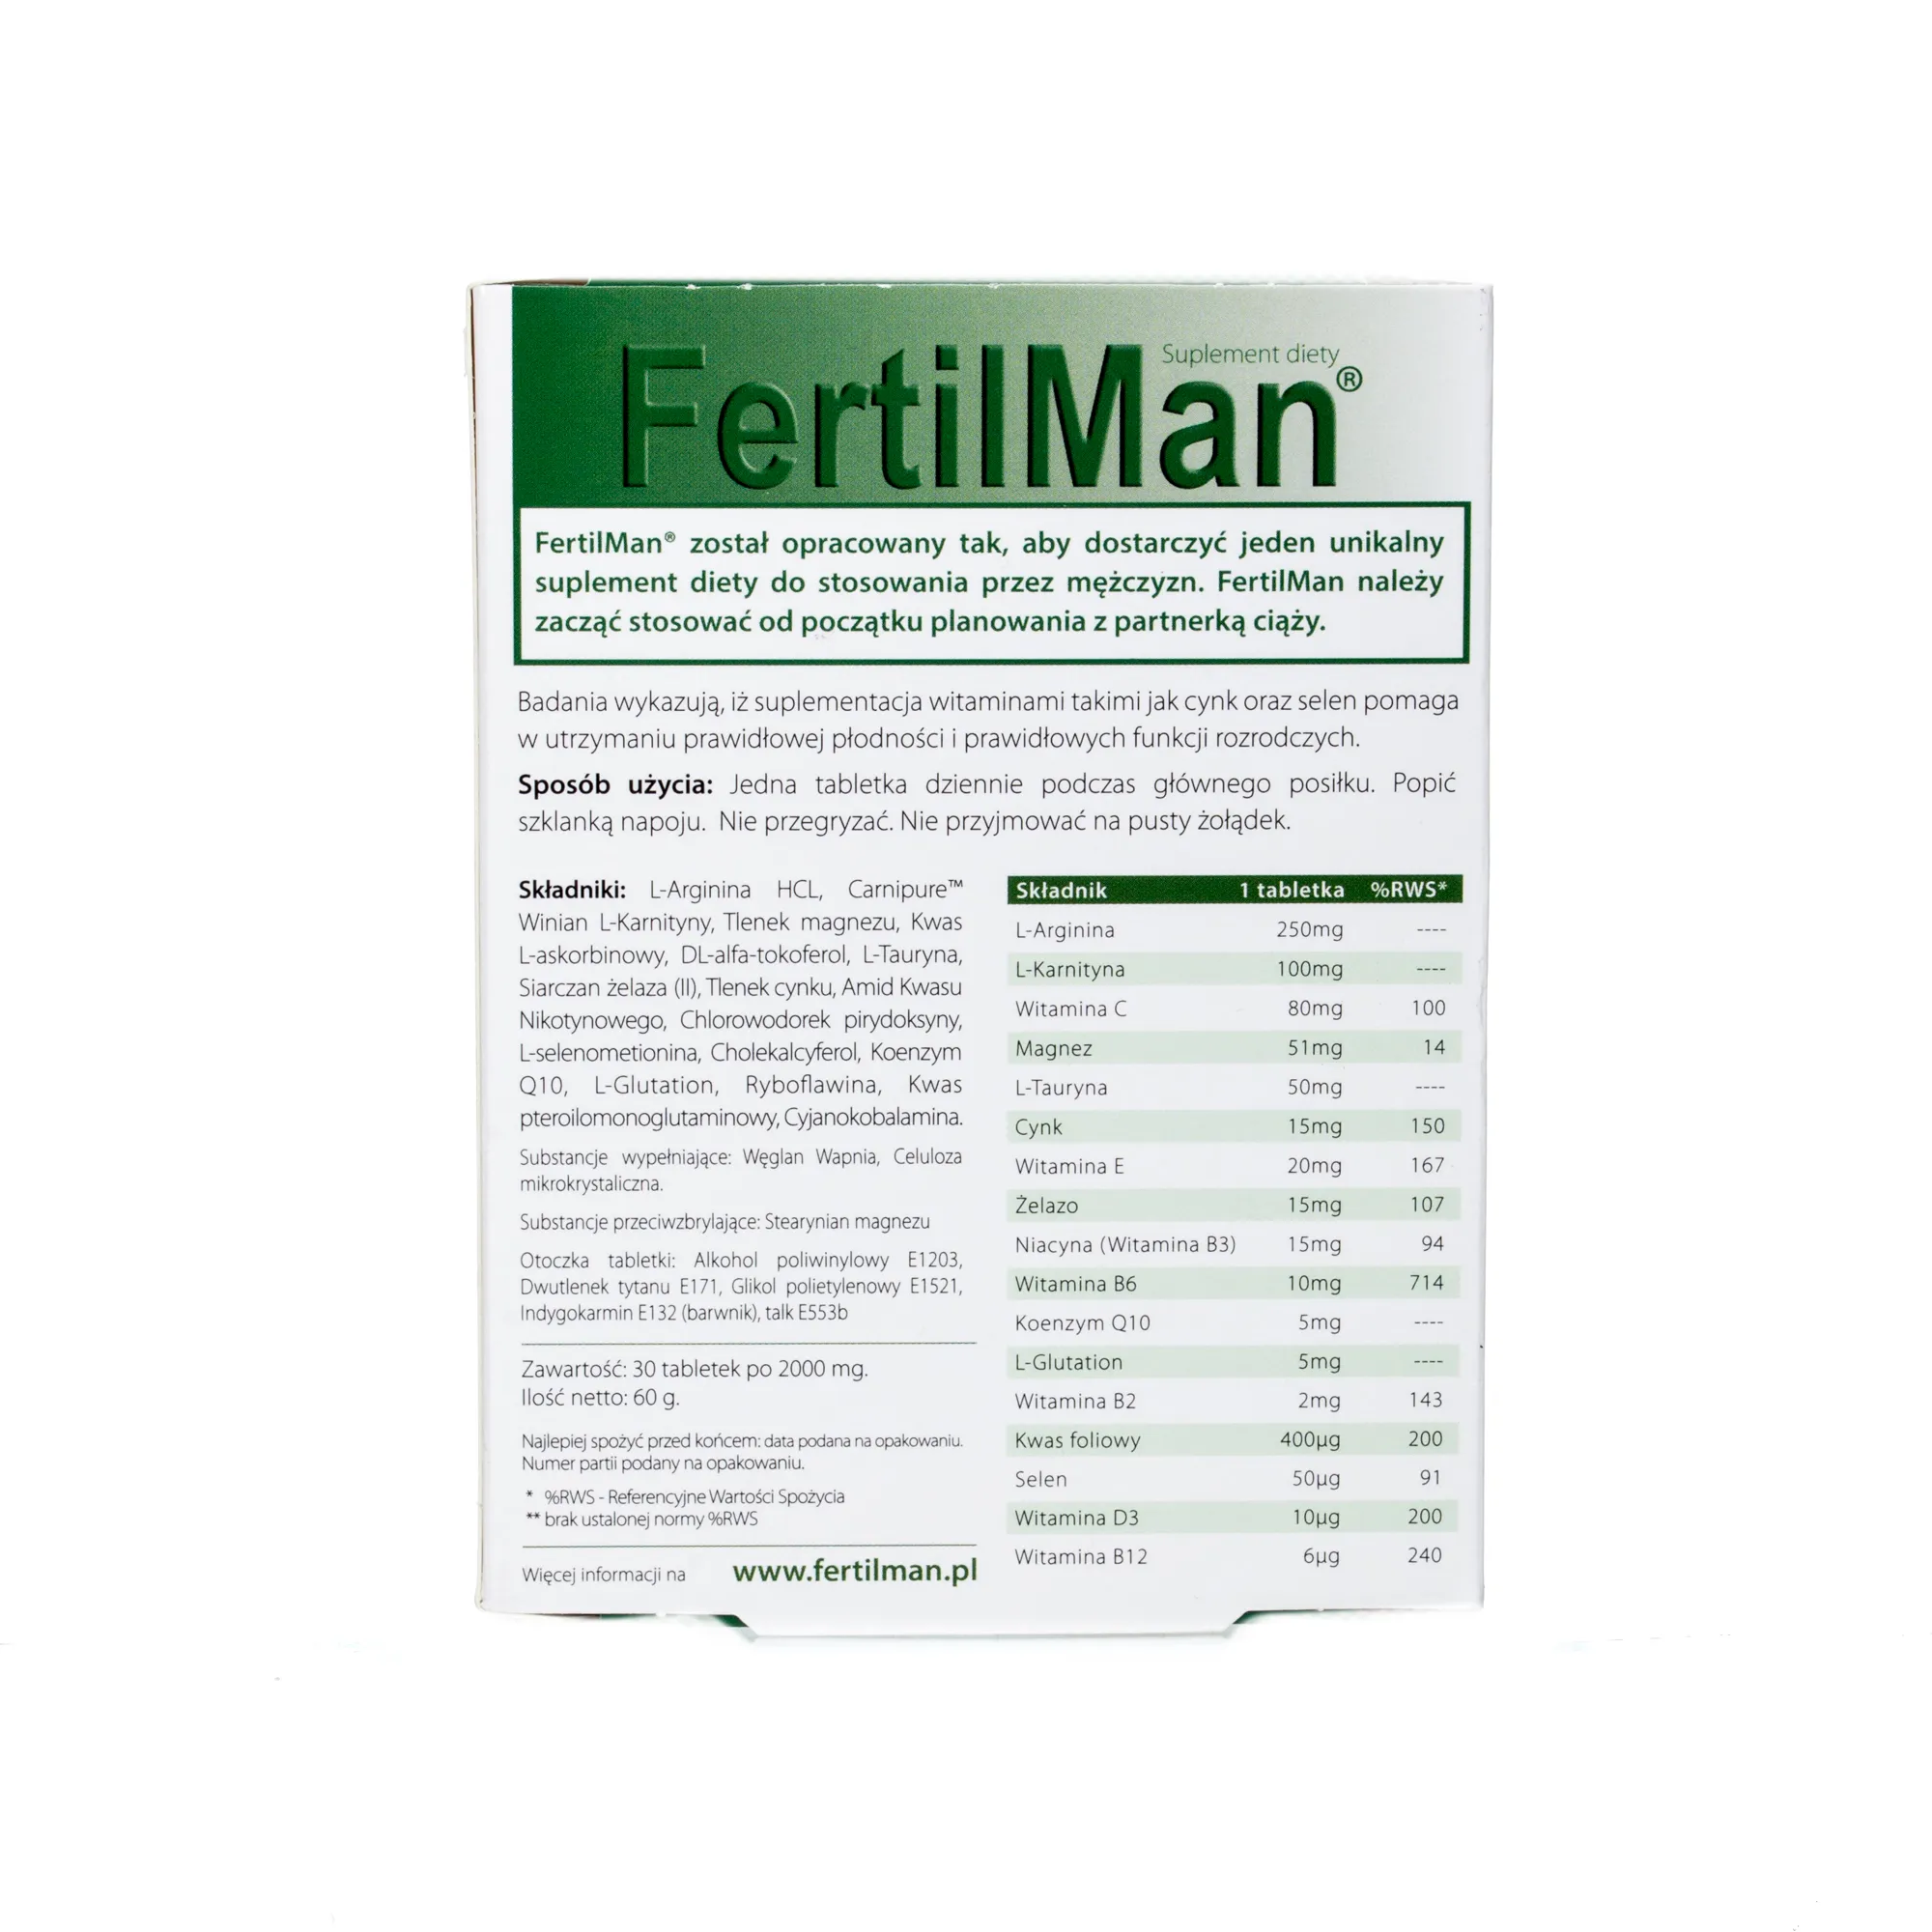 FertilMan - suplement diety bogaty w witaminy, minerały i antyoksydanty, 30 tabletek 